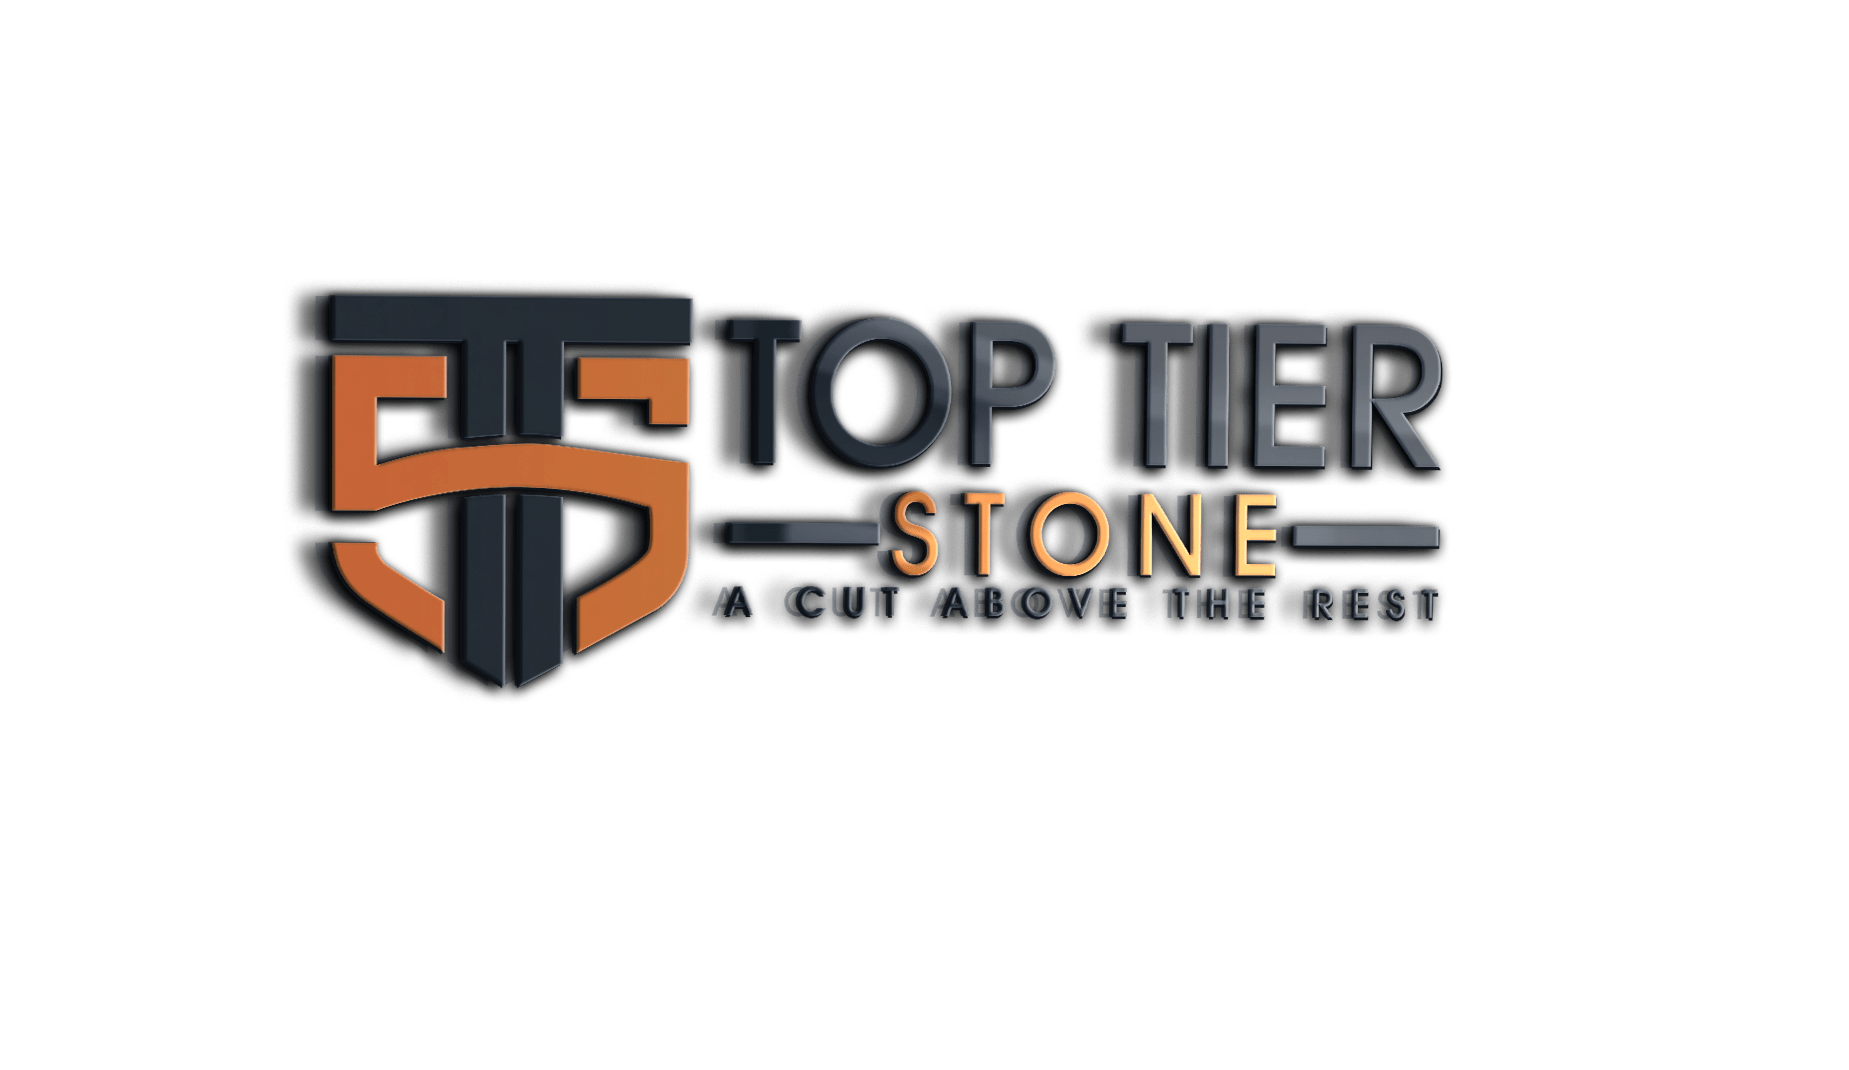 Top Tier Stone Logo